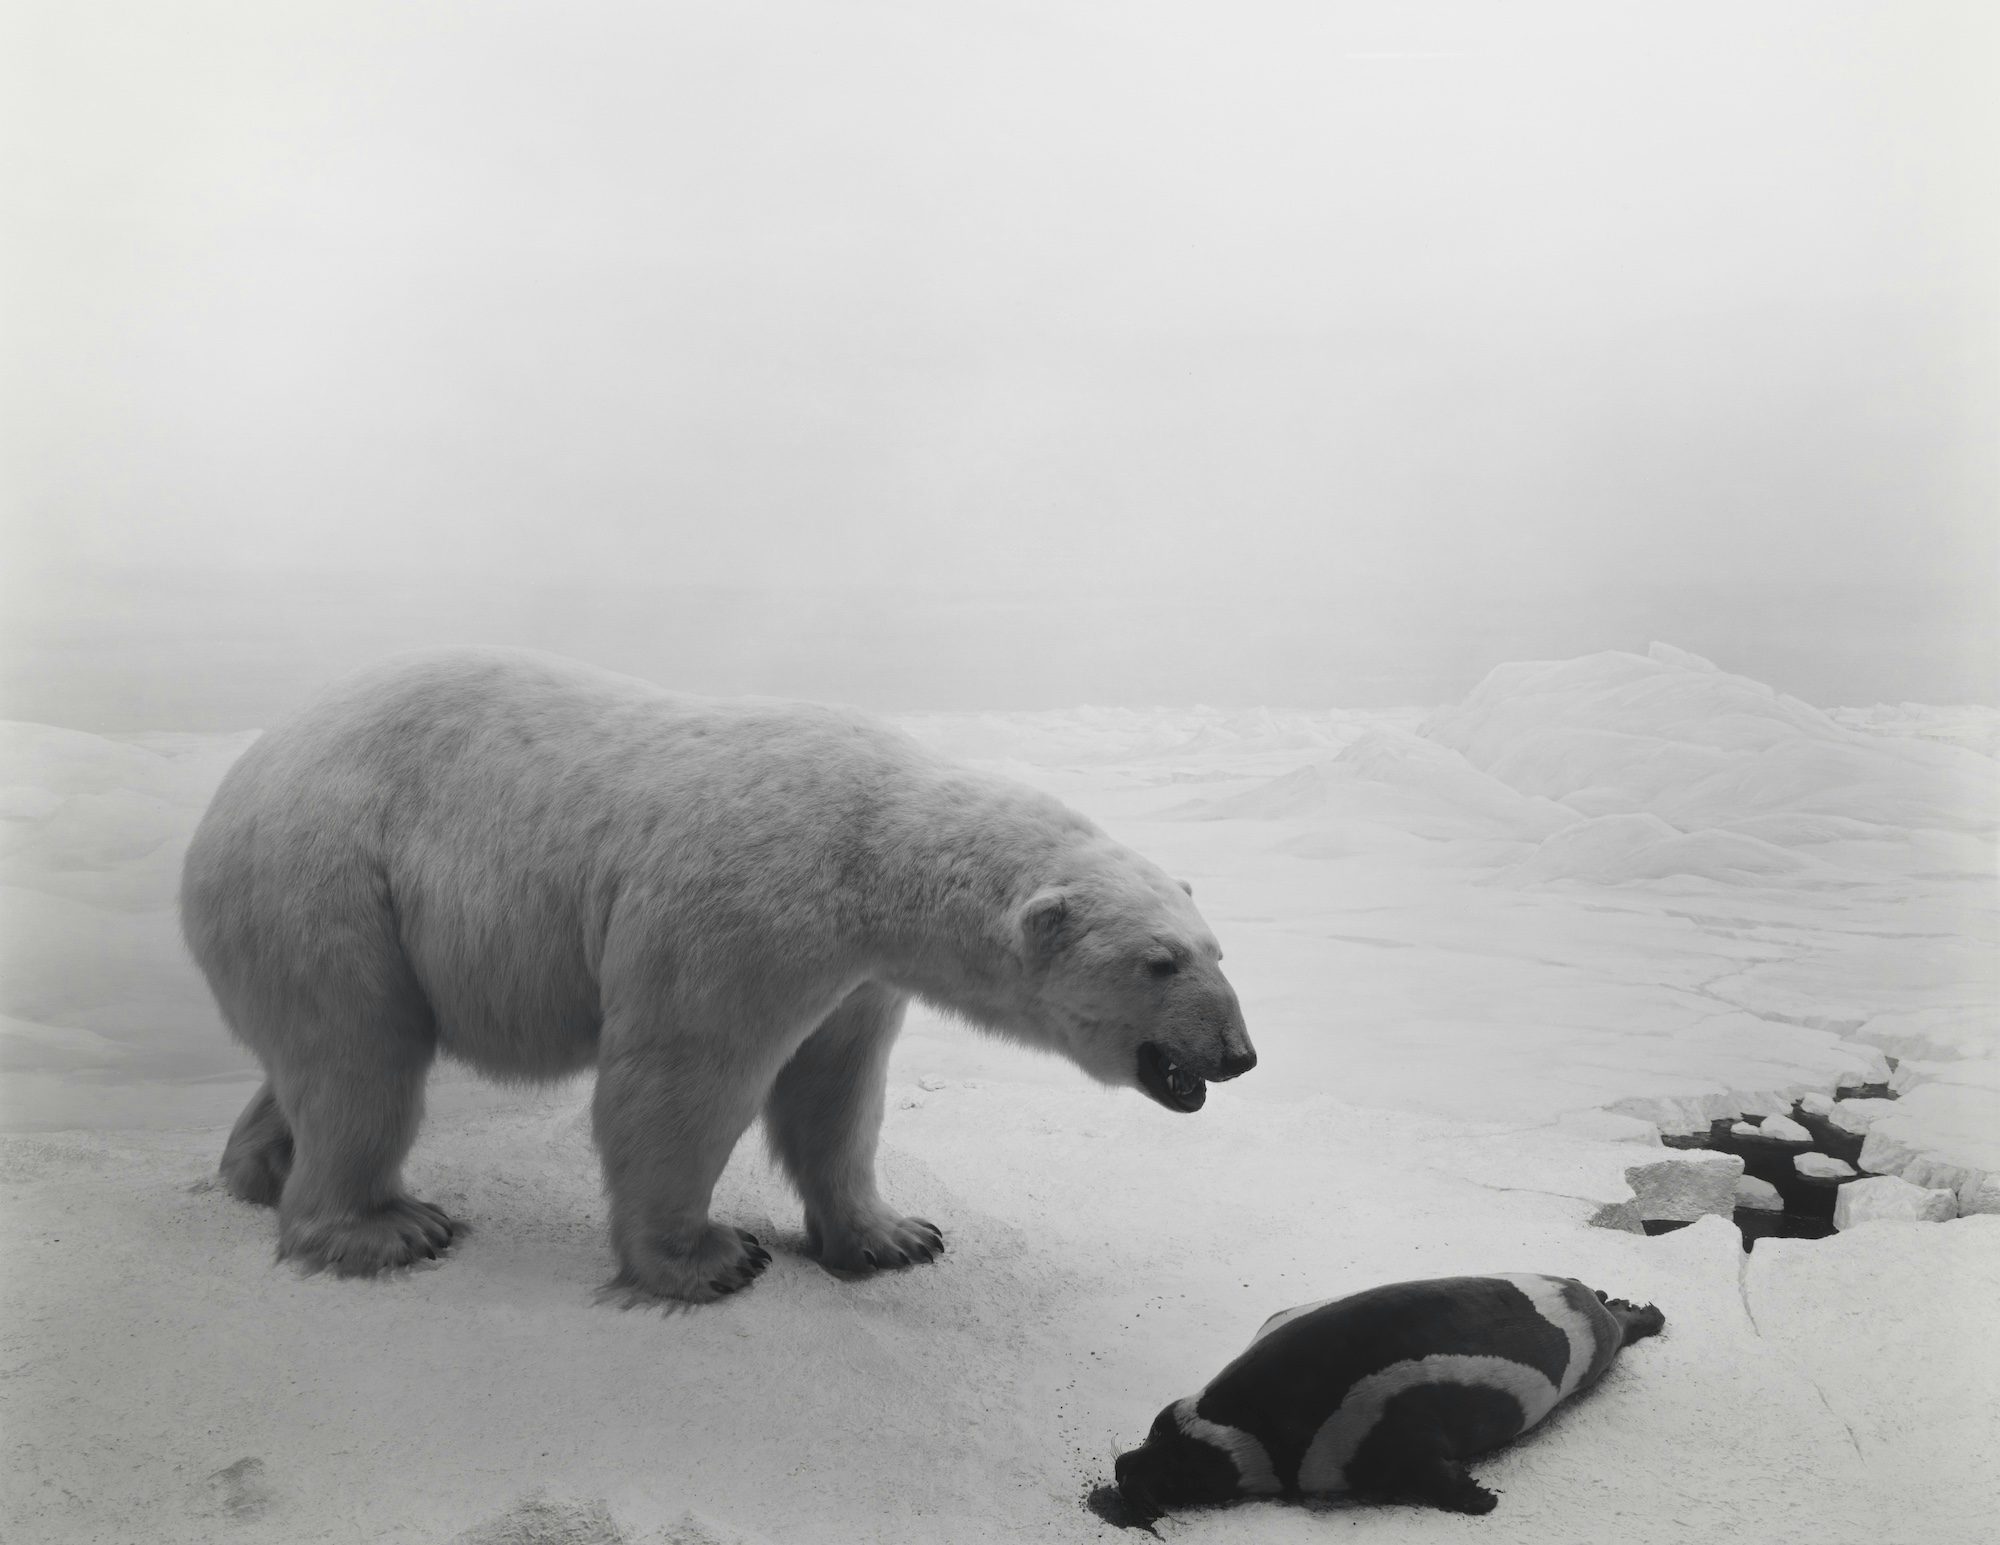 Hiroshi Sugimoto, Polar Bear, 1976